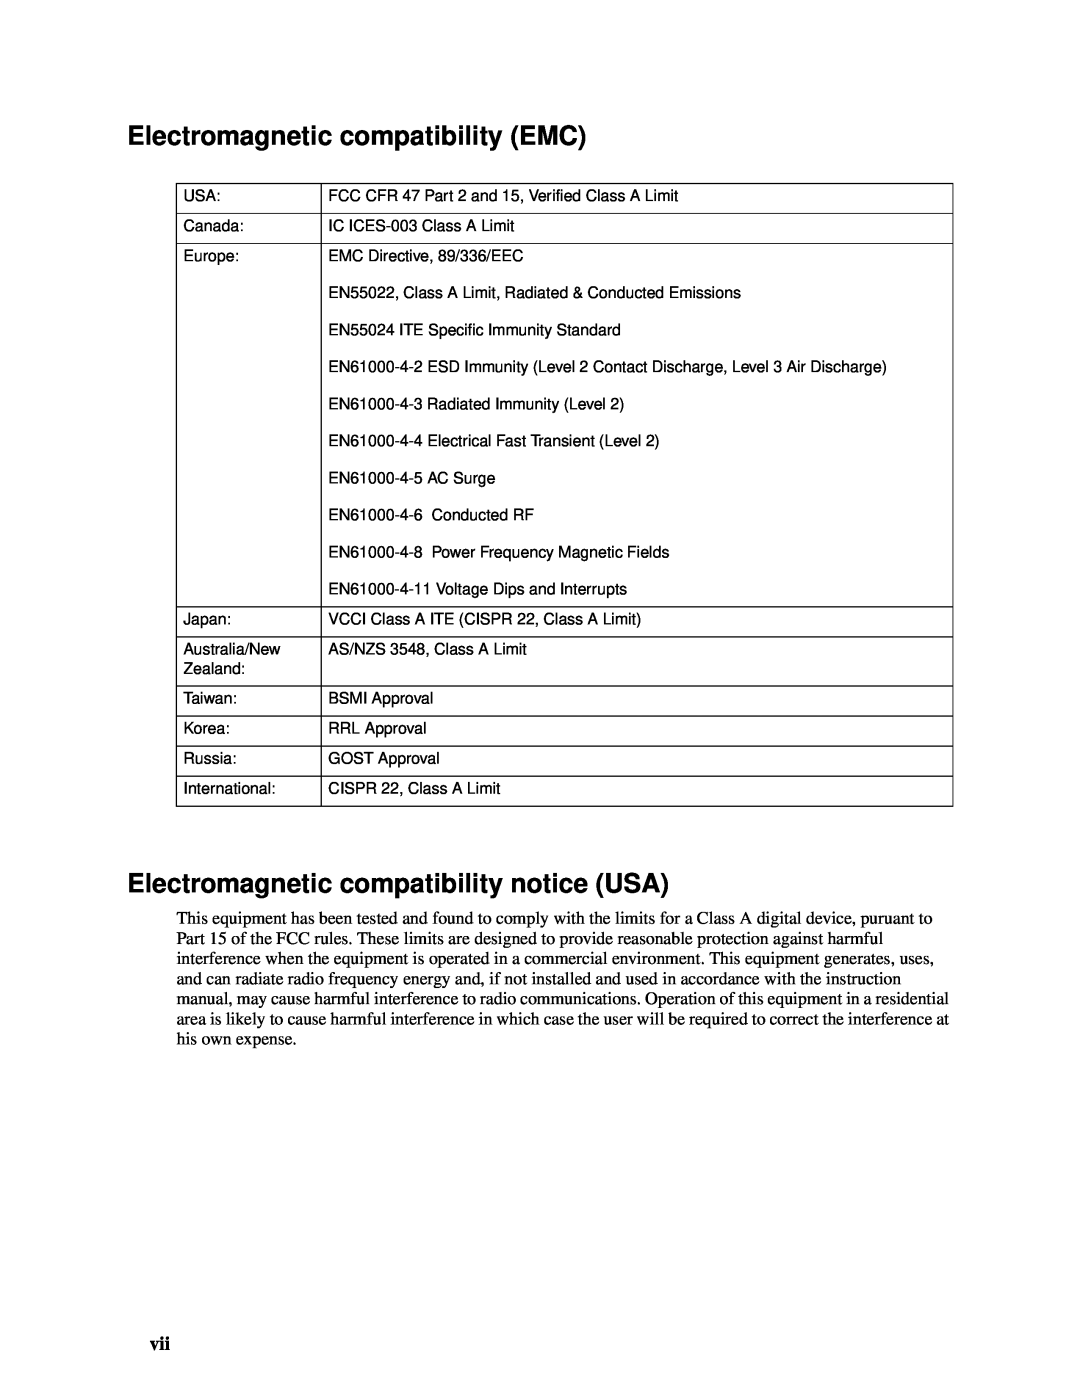 Intel SBCEFCSW, SBFCM manual Electromagnetic compatibility EMC, Electromagnetic compatibility notice USA 